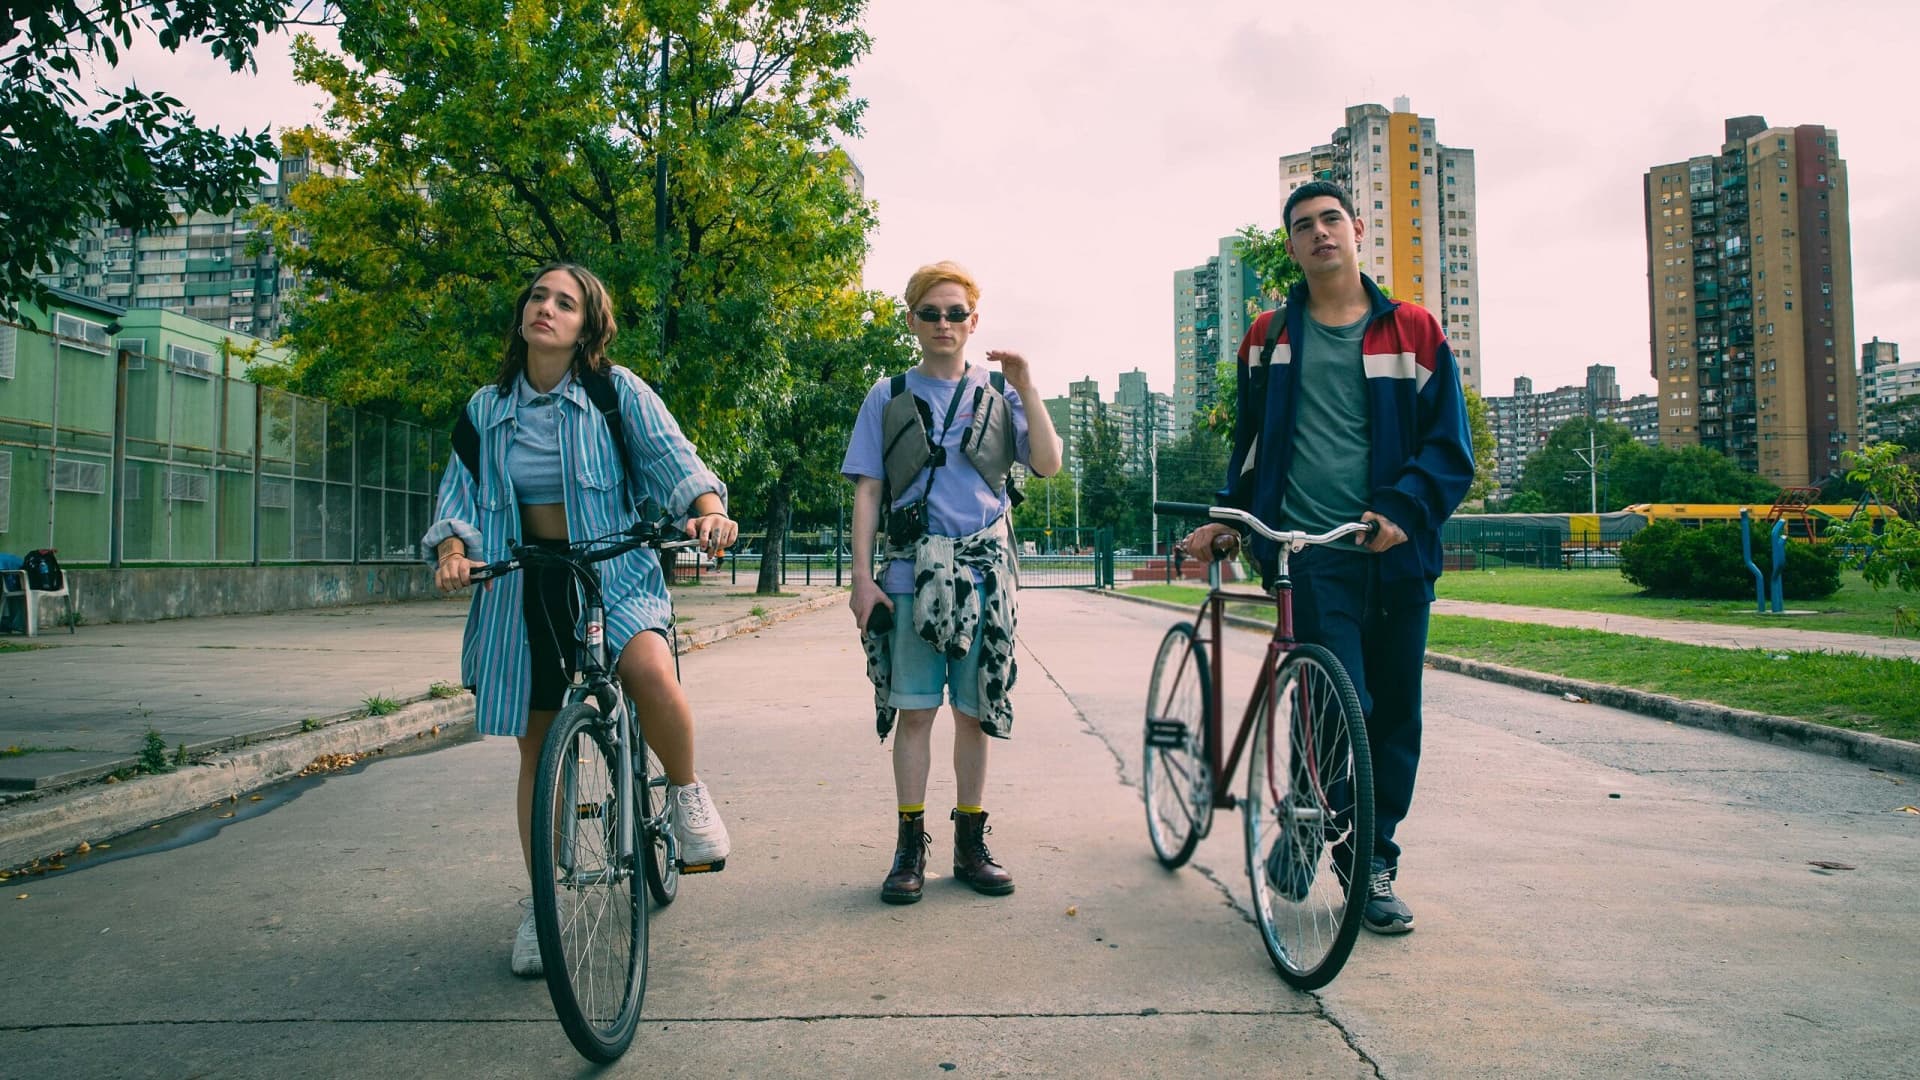 HBO Max estrenó Días de Gallo, su serie juvenil musical sobre el freestyle